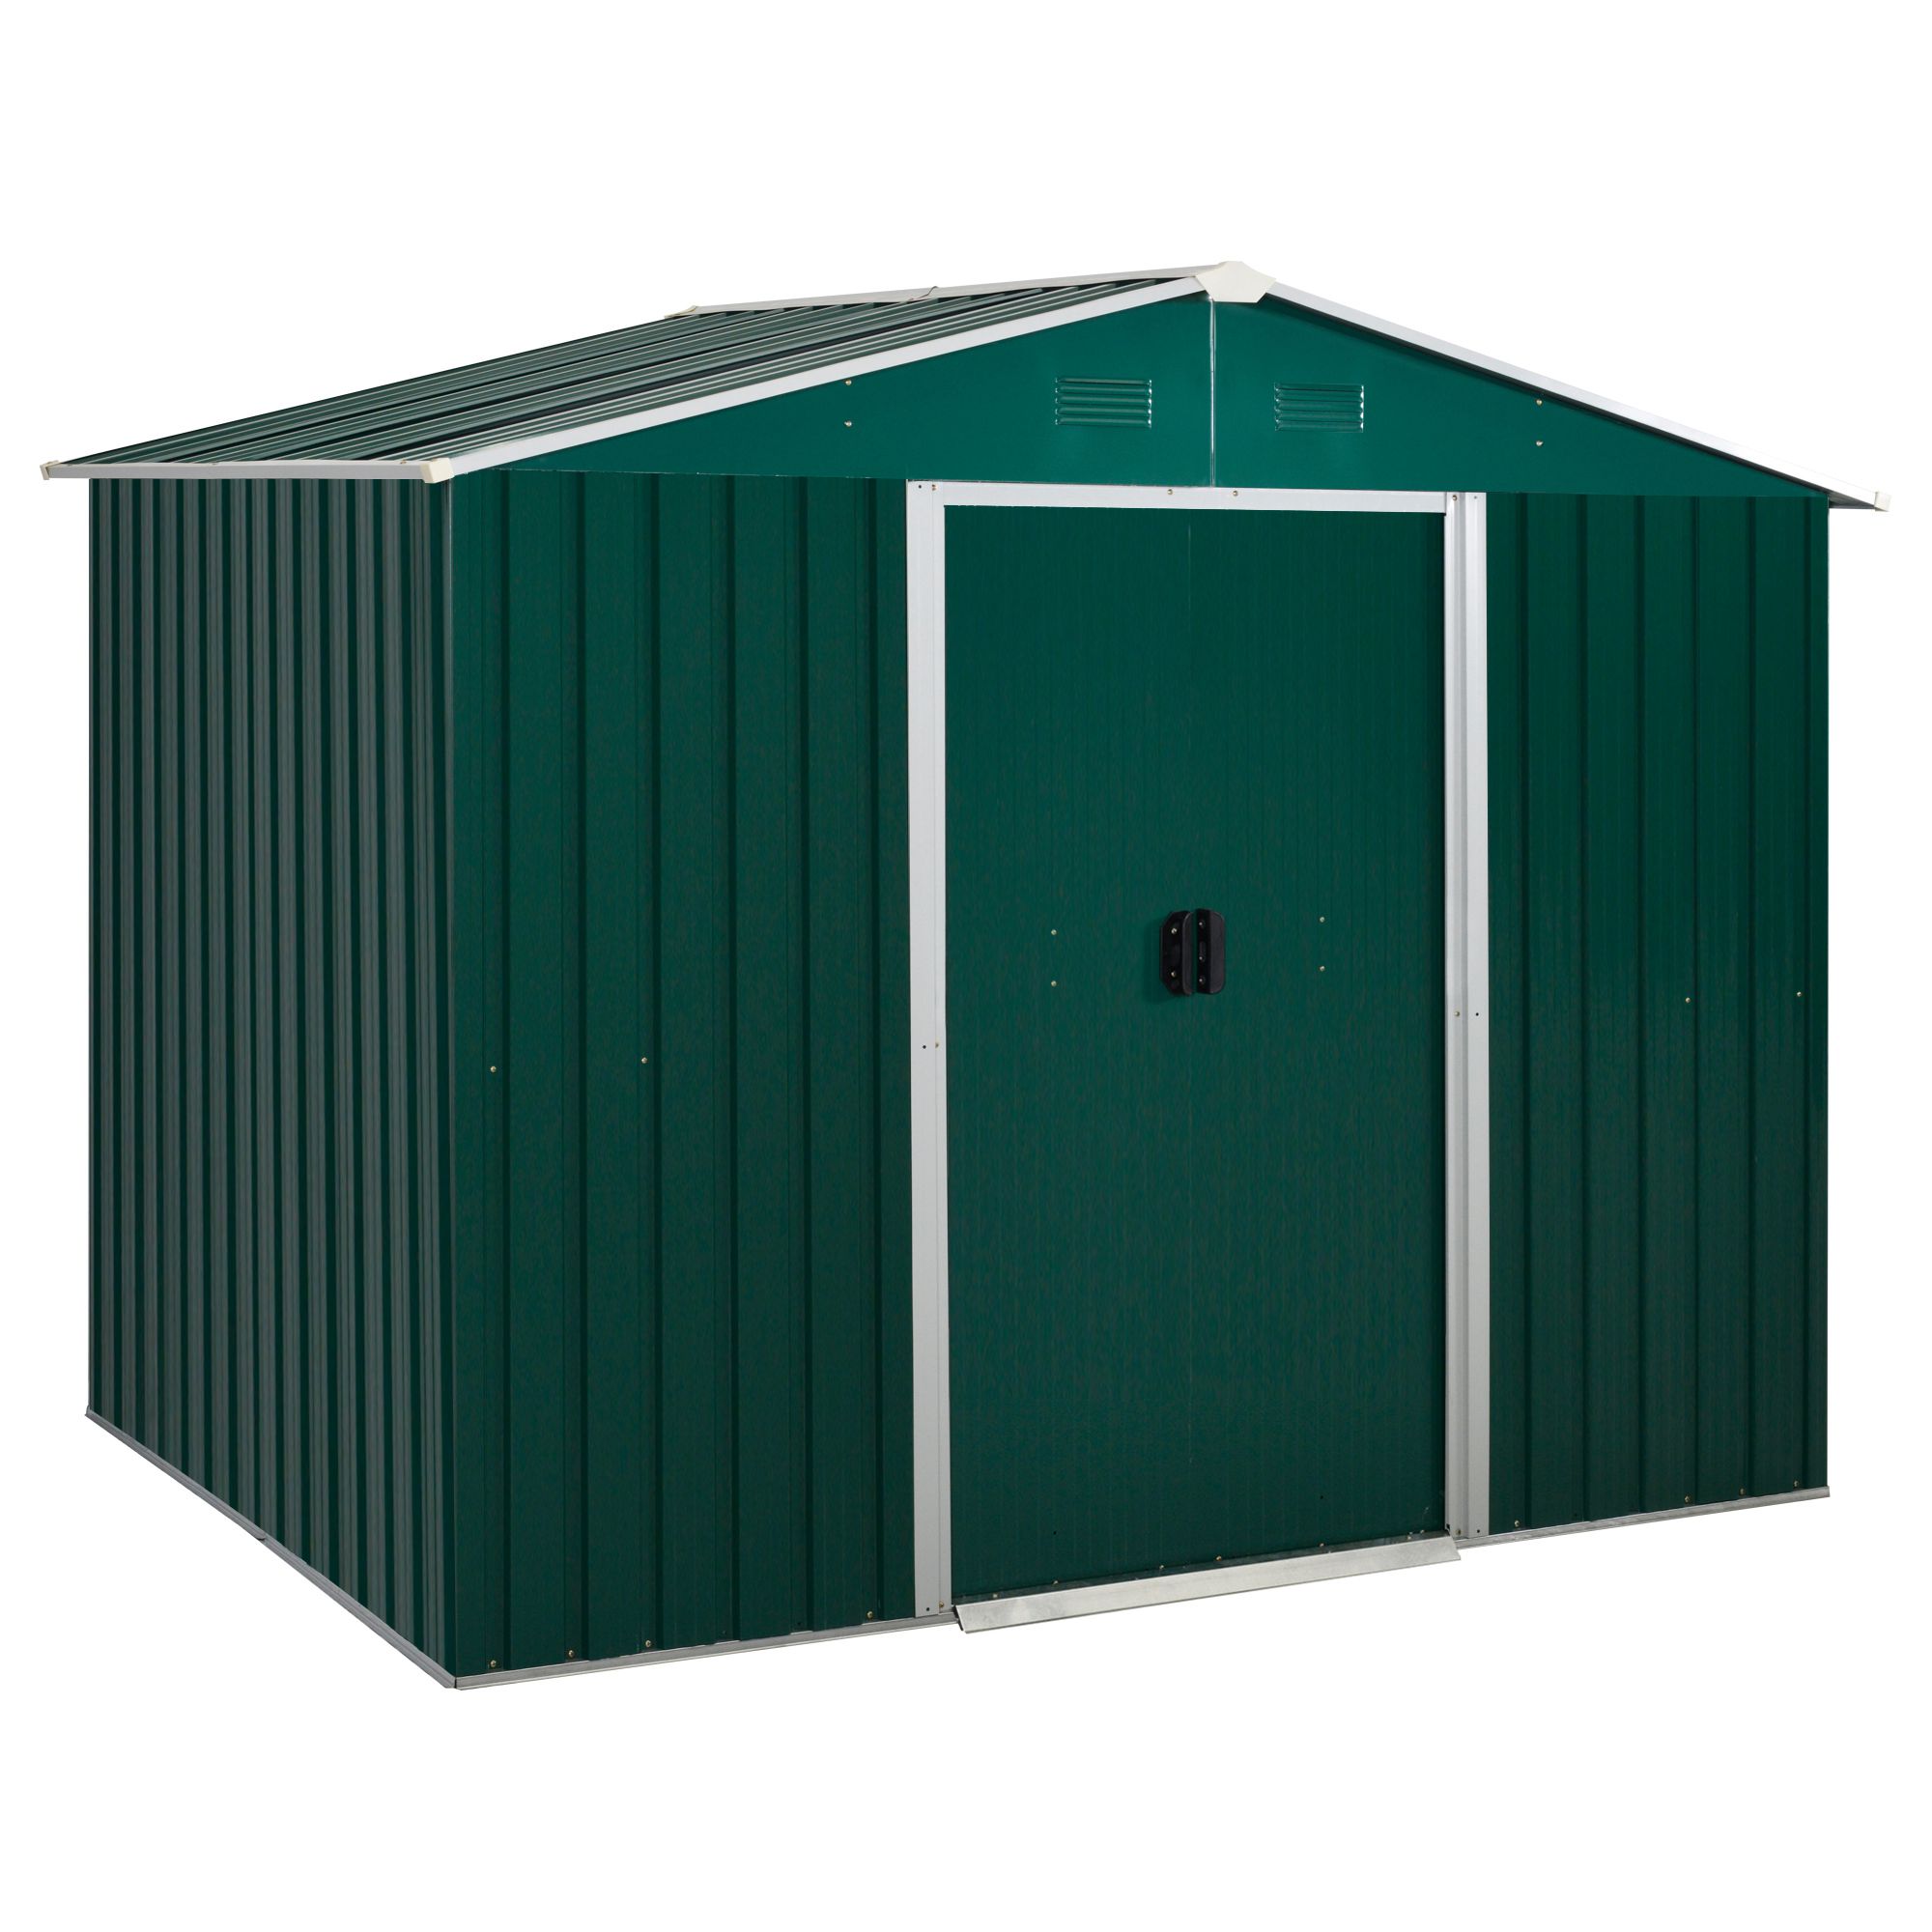 8'x6' Metal Outdoor Storage Shed Sliding Doors Vents Green